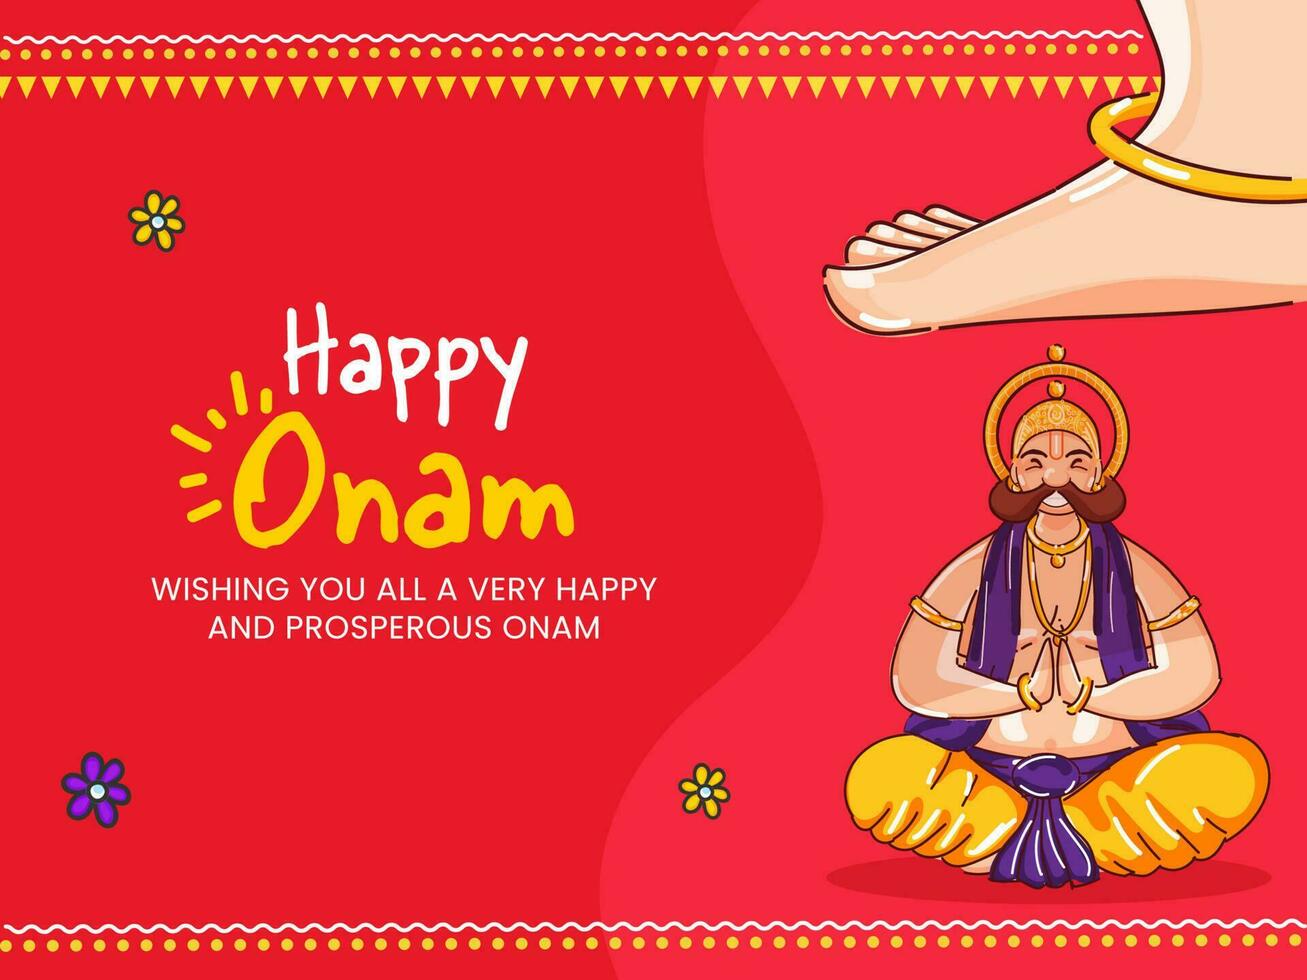 Happy Onam Celebration Greeting Card With Vamana Leg Over King Mahabali On Red Background. vector